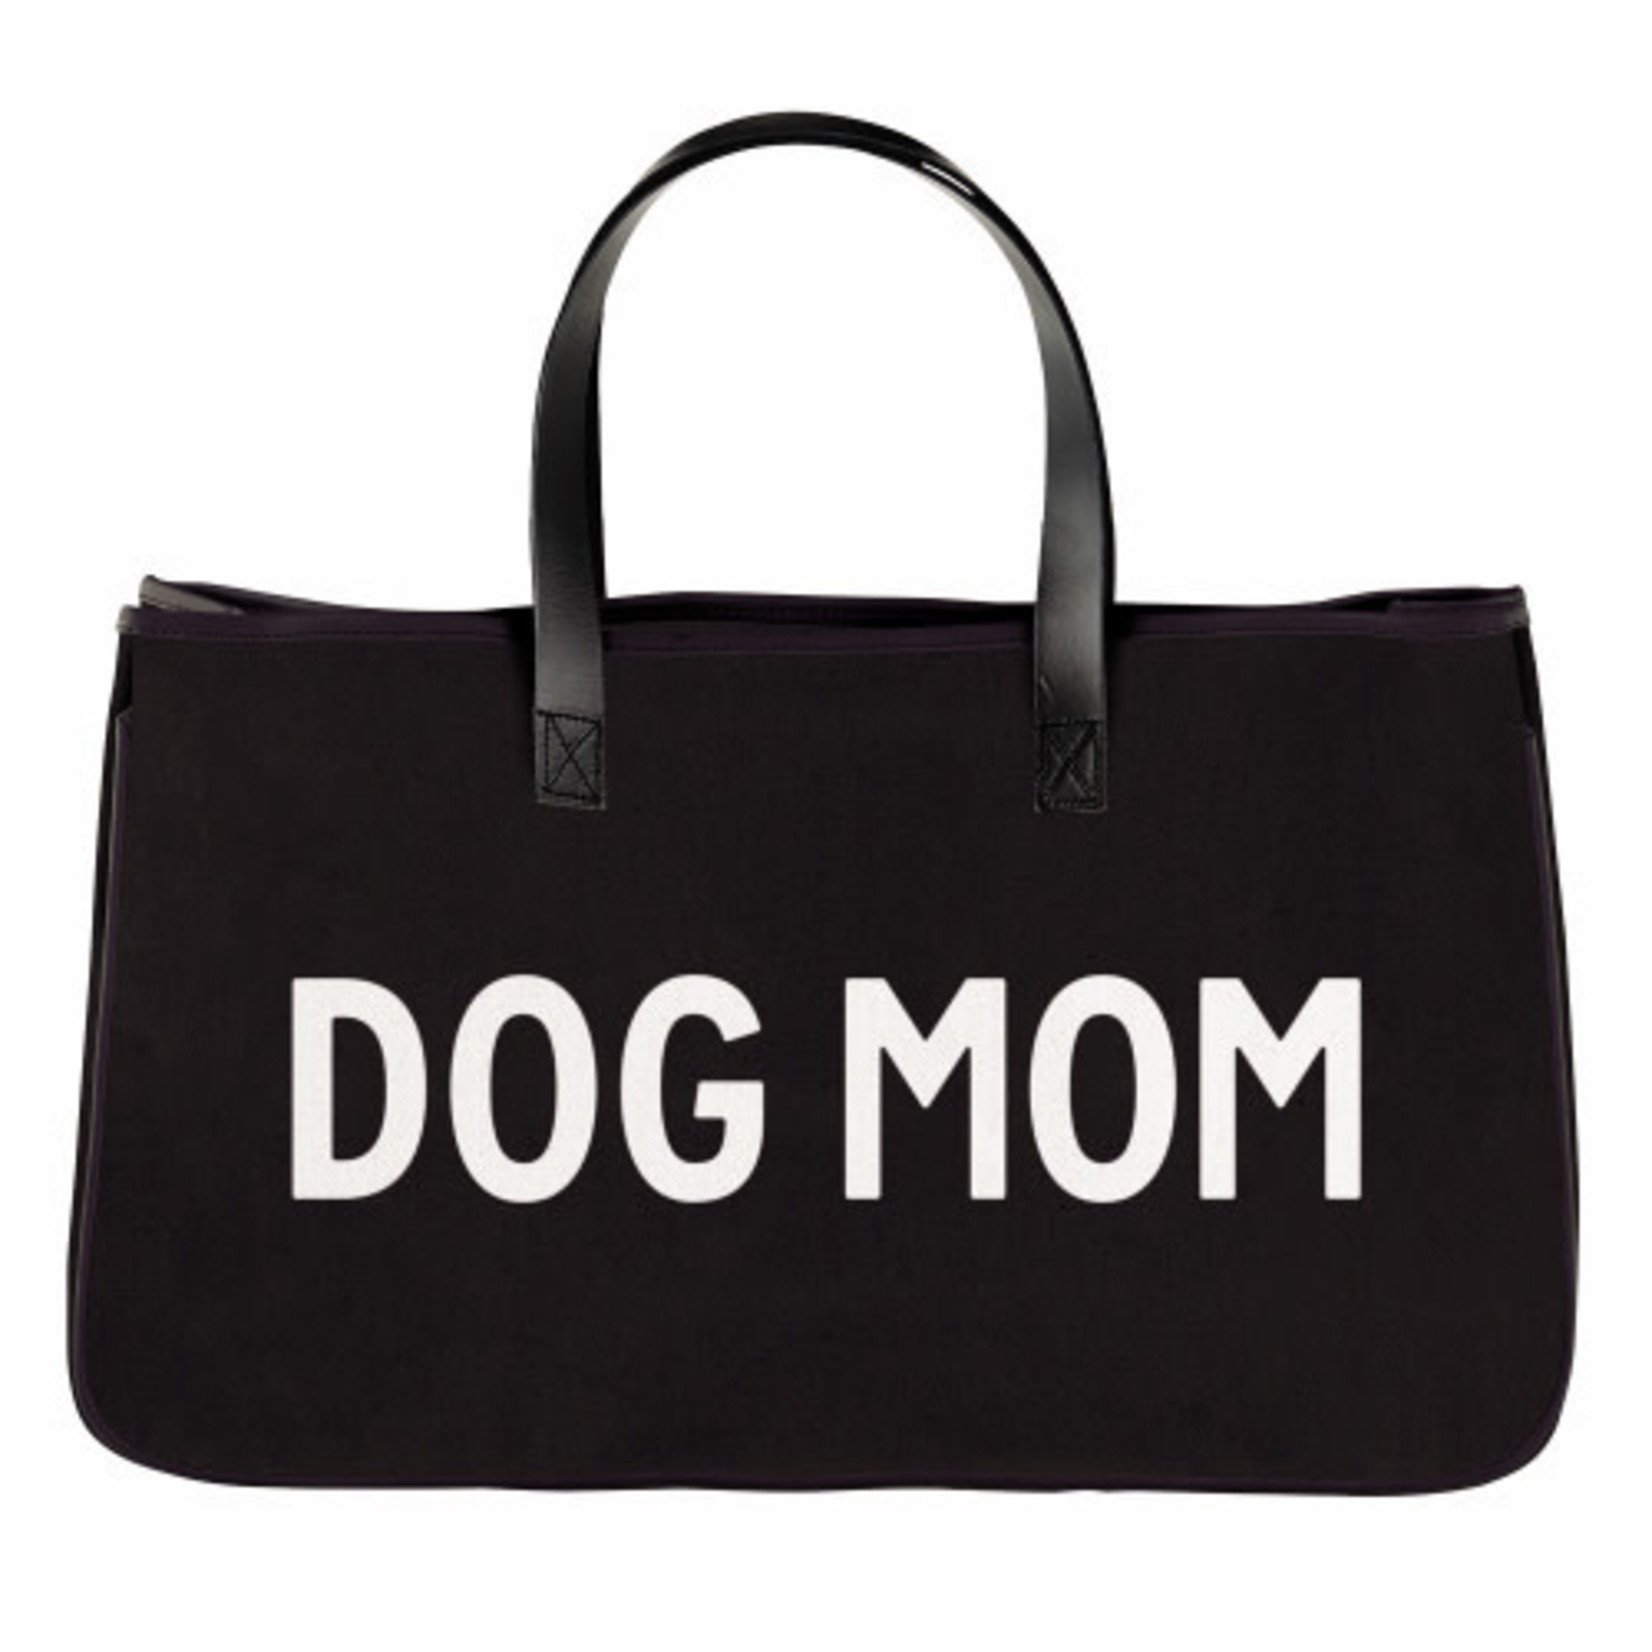 Creative Brands Dog Mom Black Canvas Tote